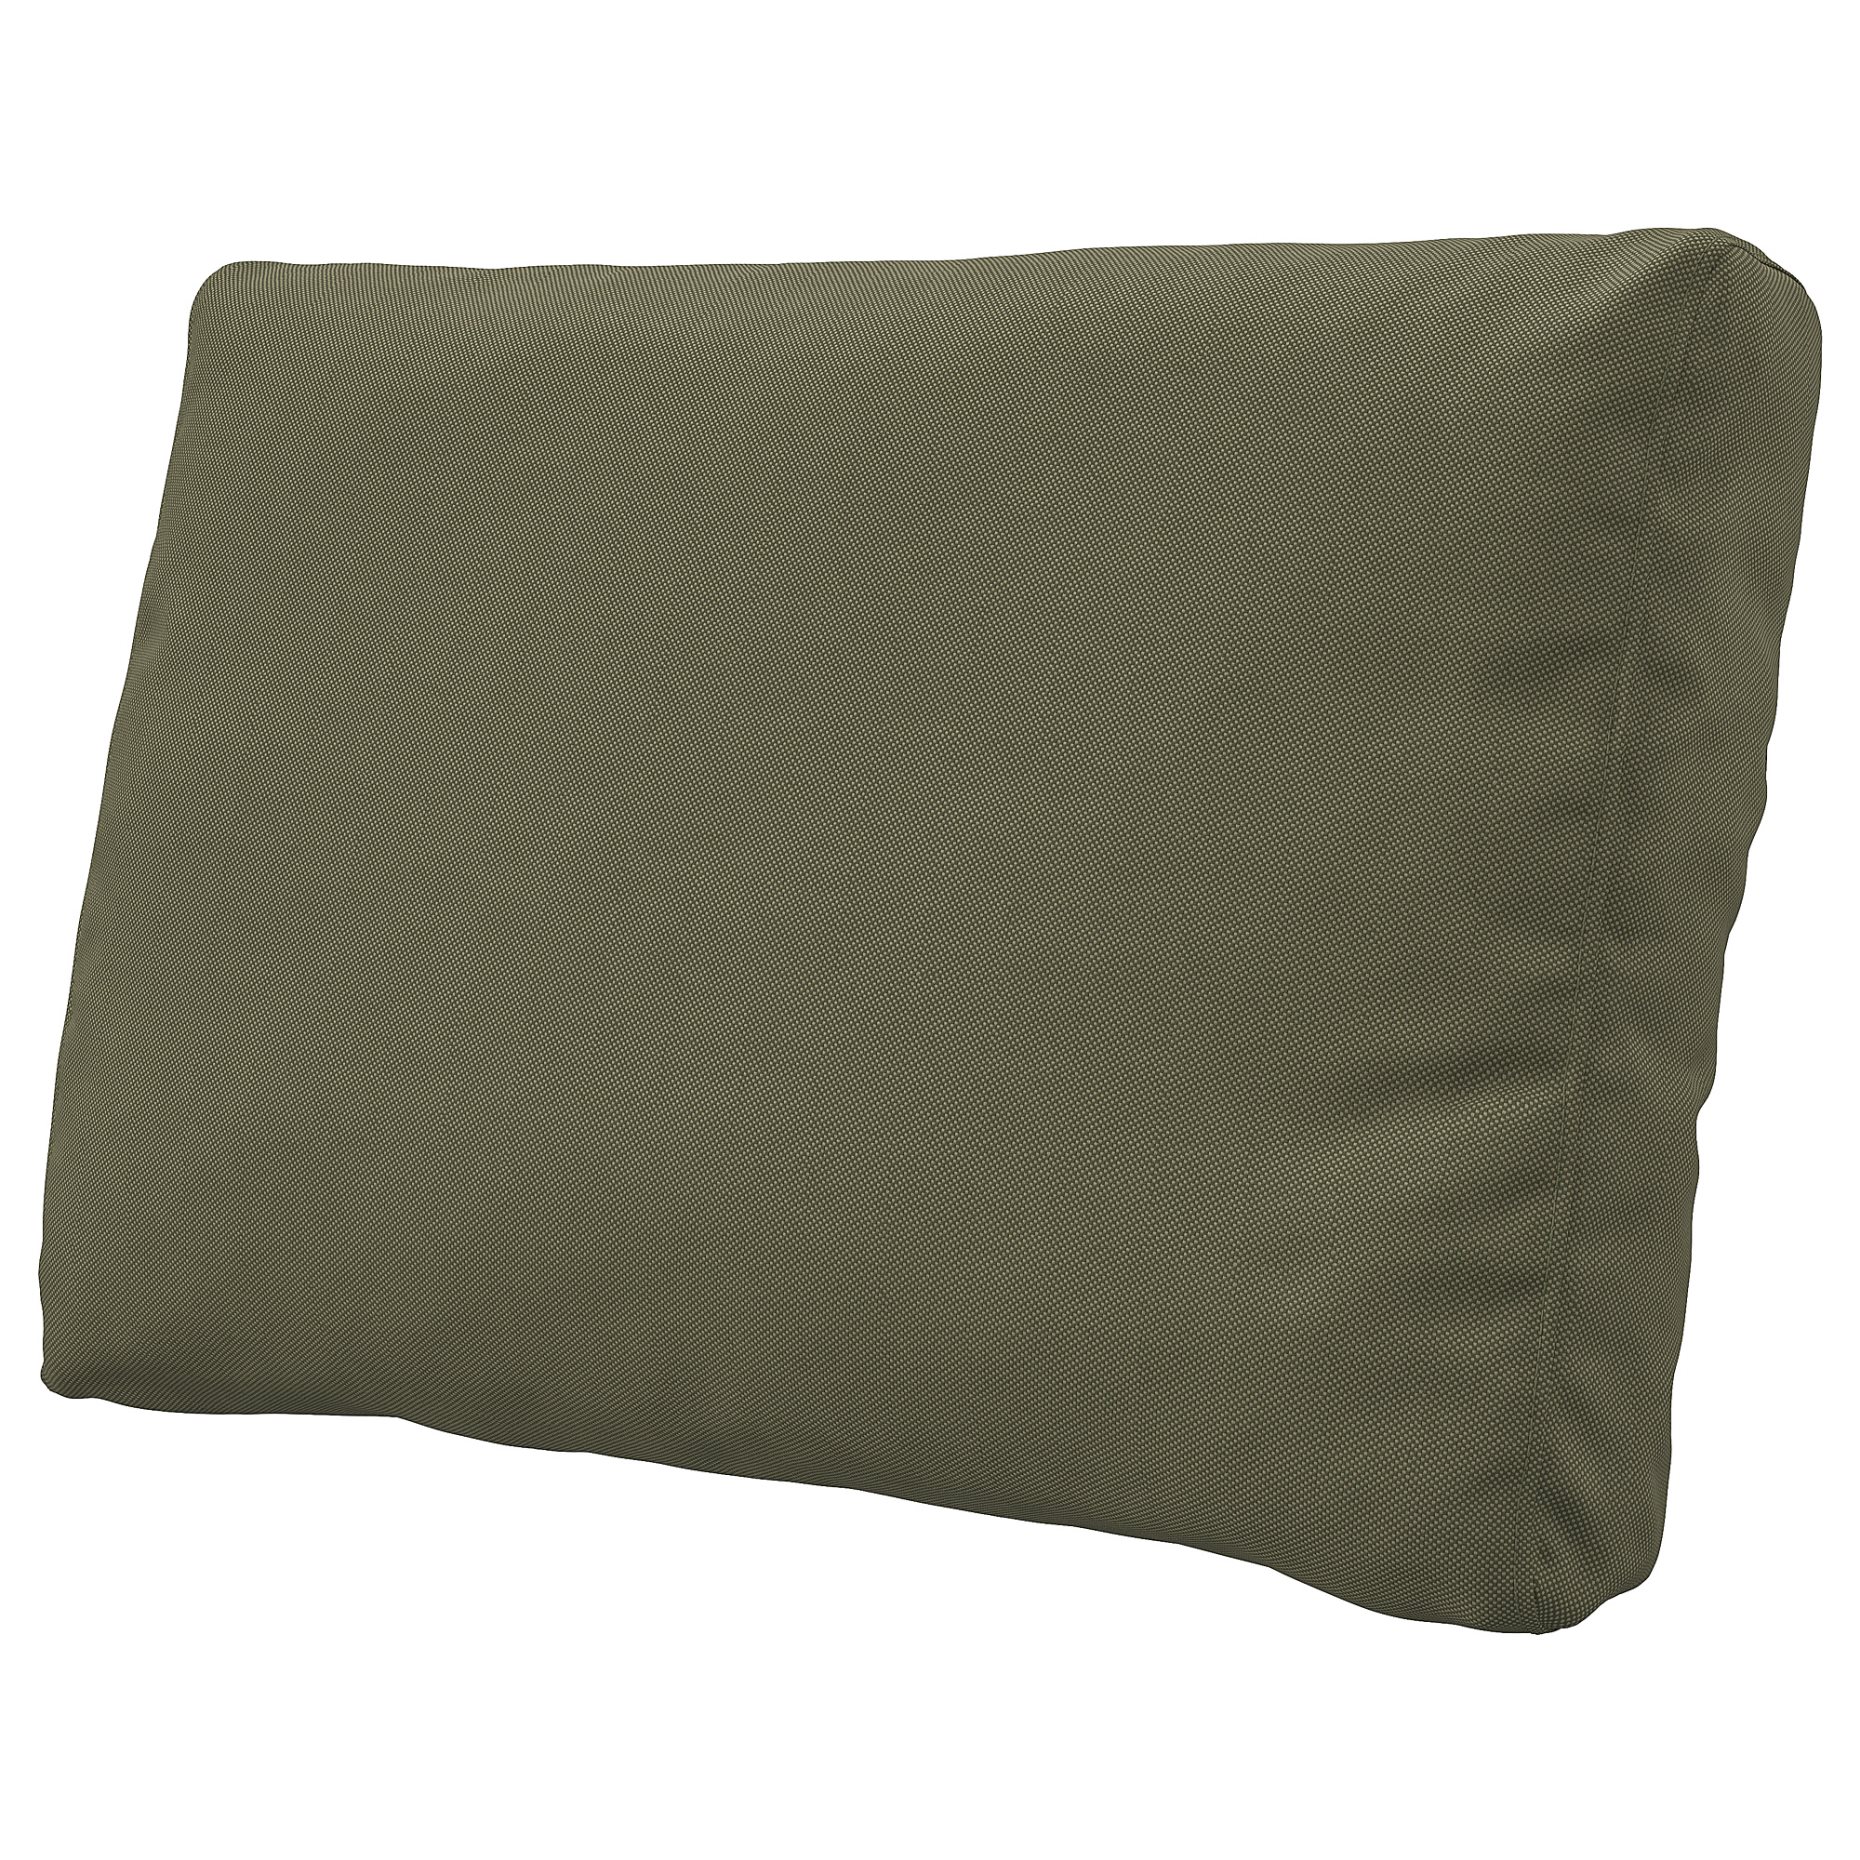 FROSON/DUVHOLMEN, back cushion, outdoor, 094.127.75